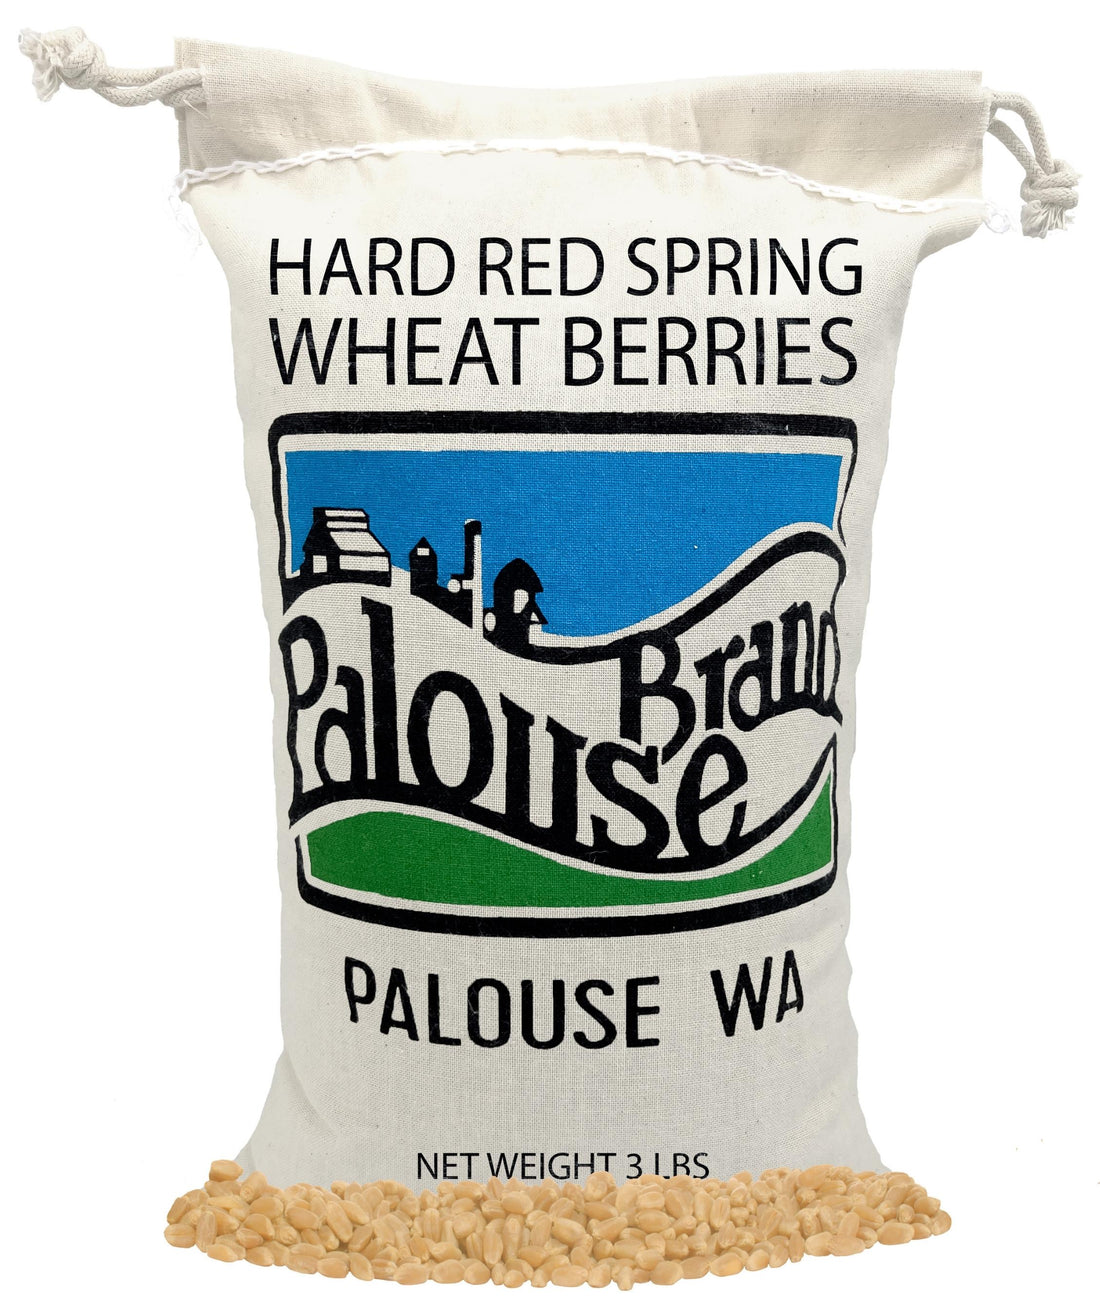 Palouse brand Red Spring Wheat,  3 pounds,  Non-GMO Wheat Berries,  Washington grown